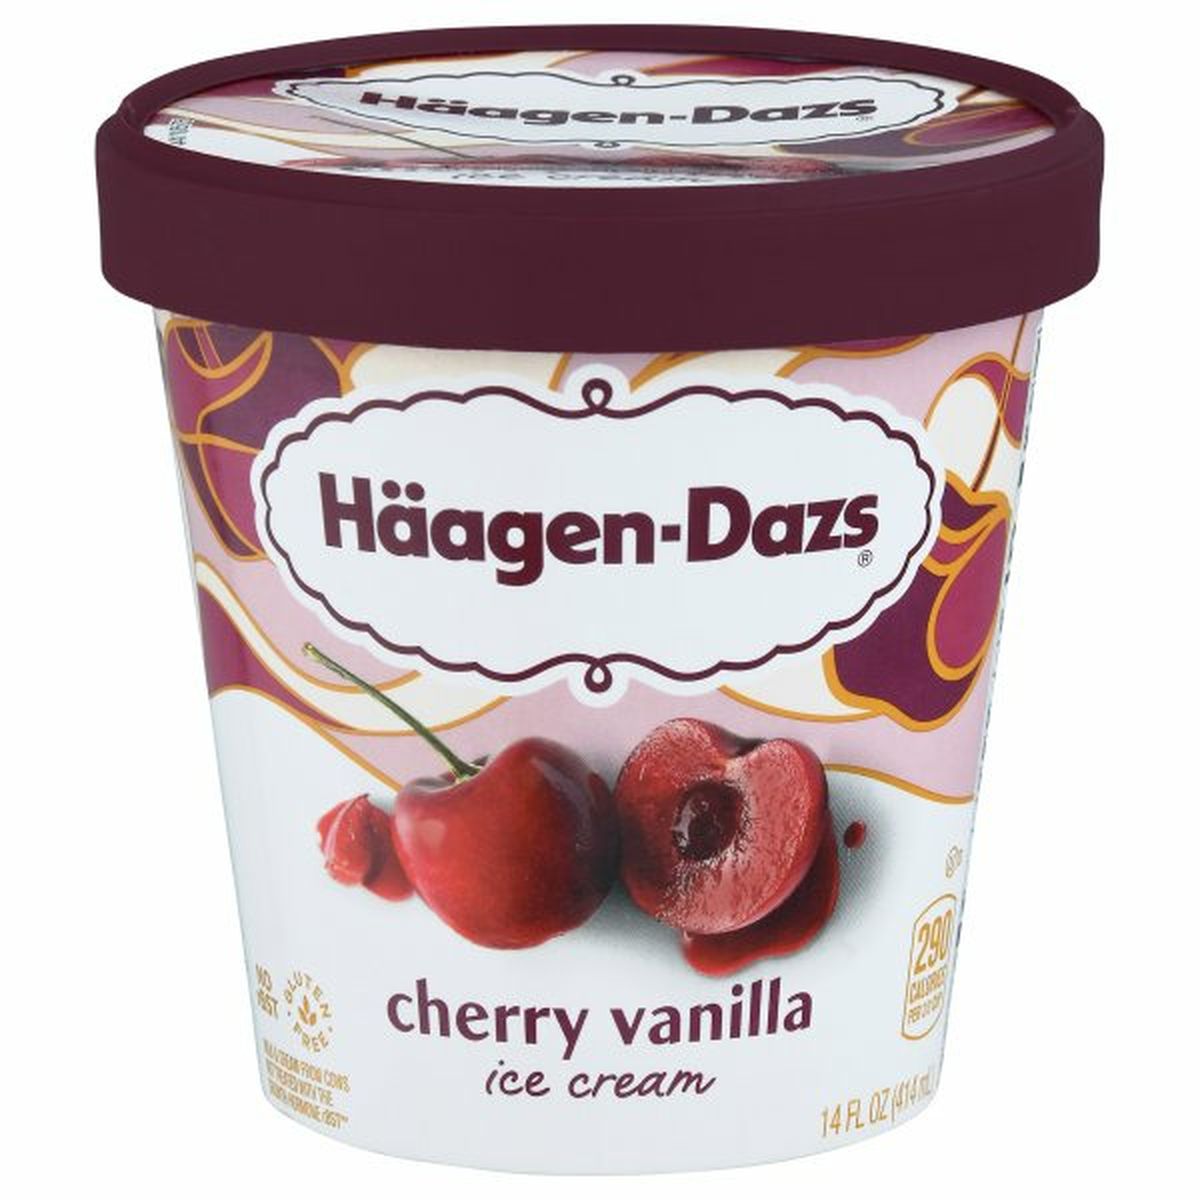 Calories in Haagen-Dazs Ice Cream, Cherry Vanilla